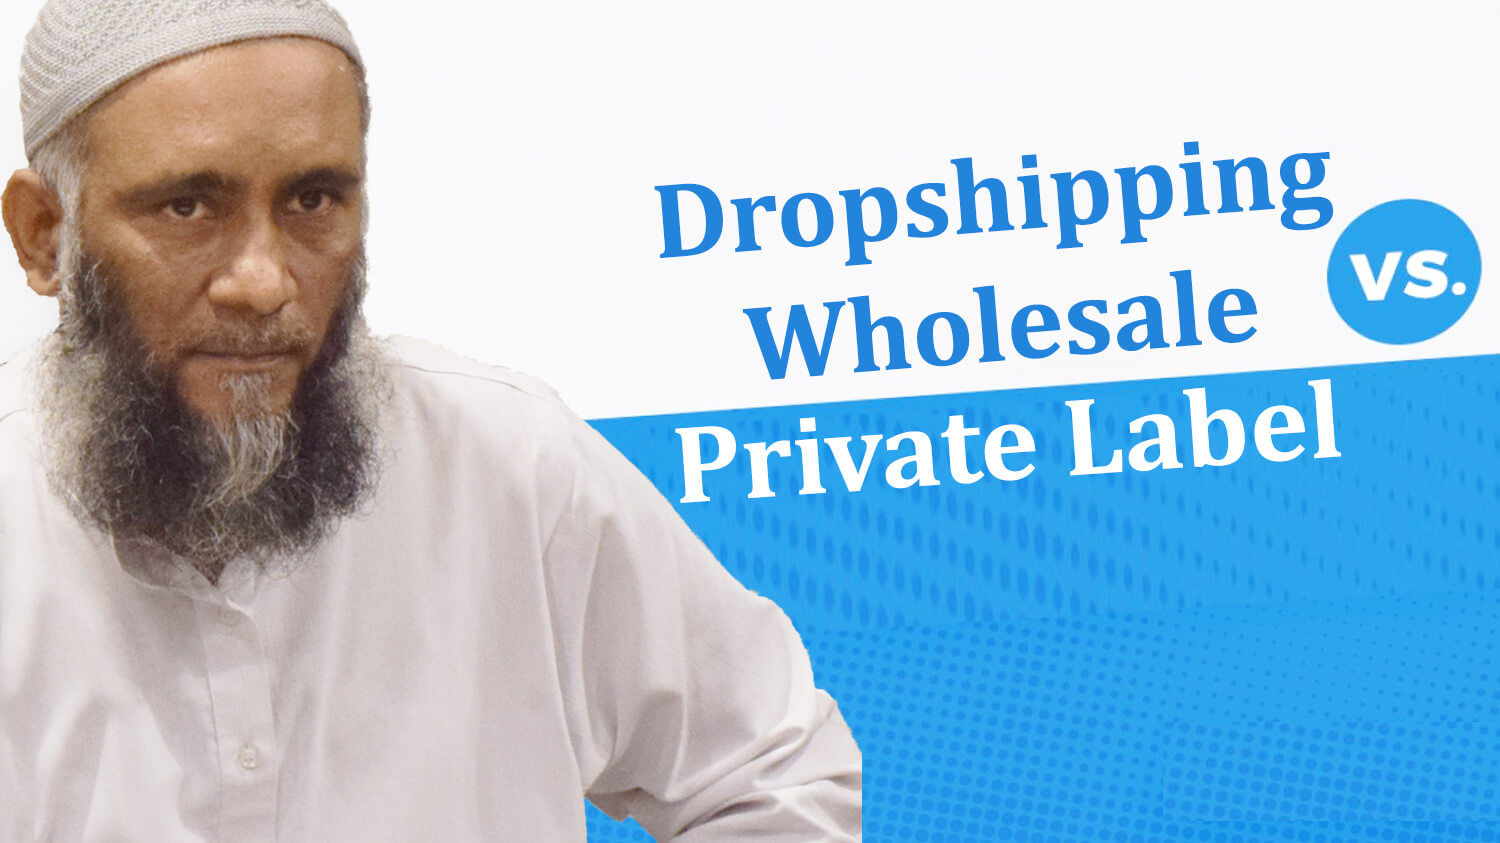 Dropshipping vs Wholesale vs Private Label